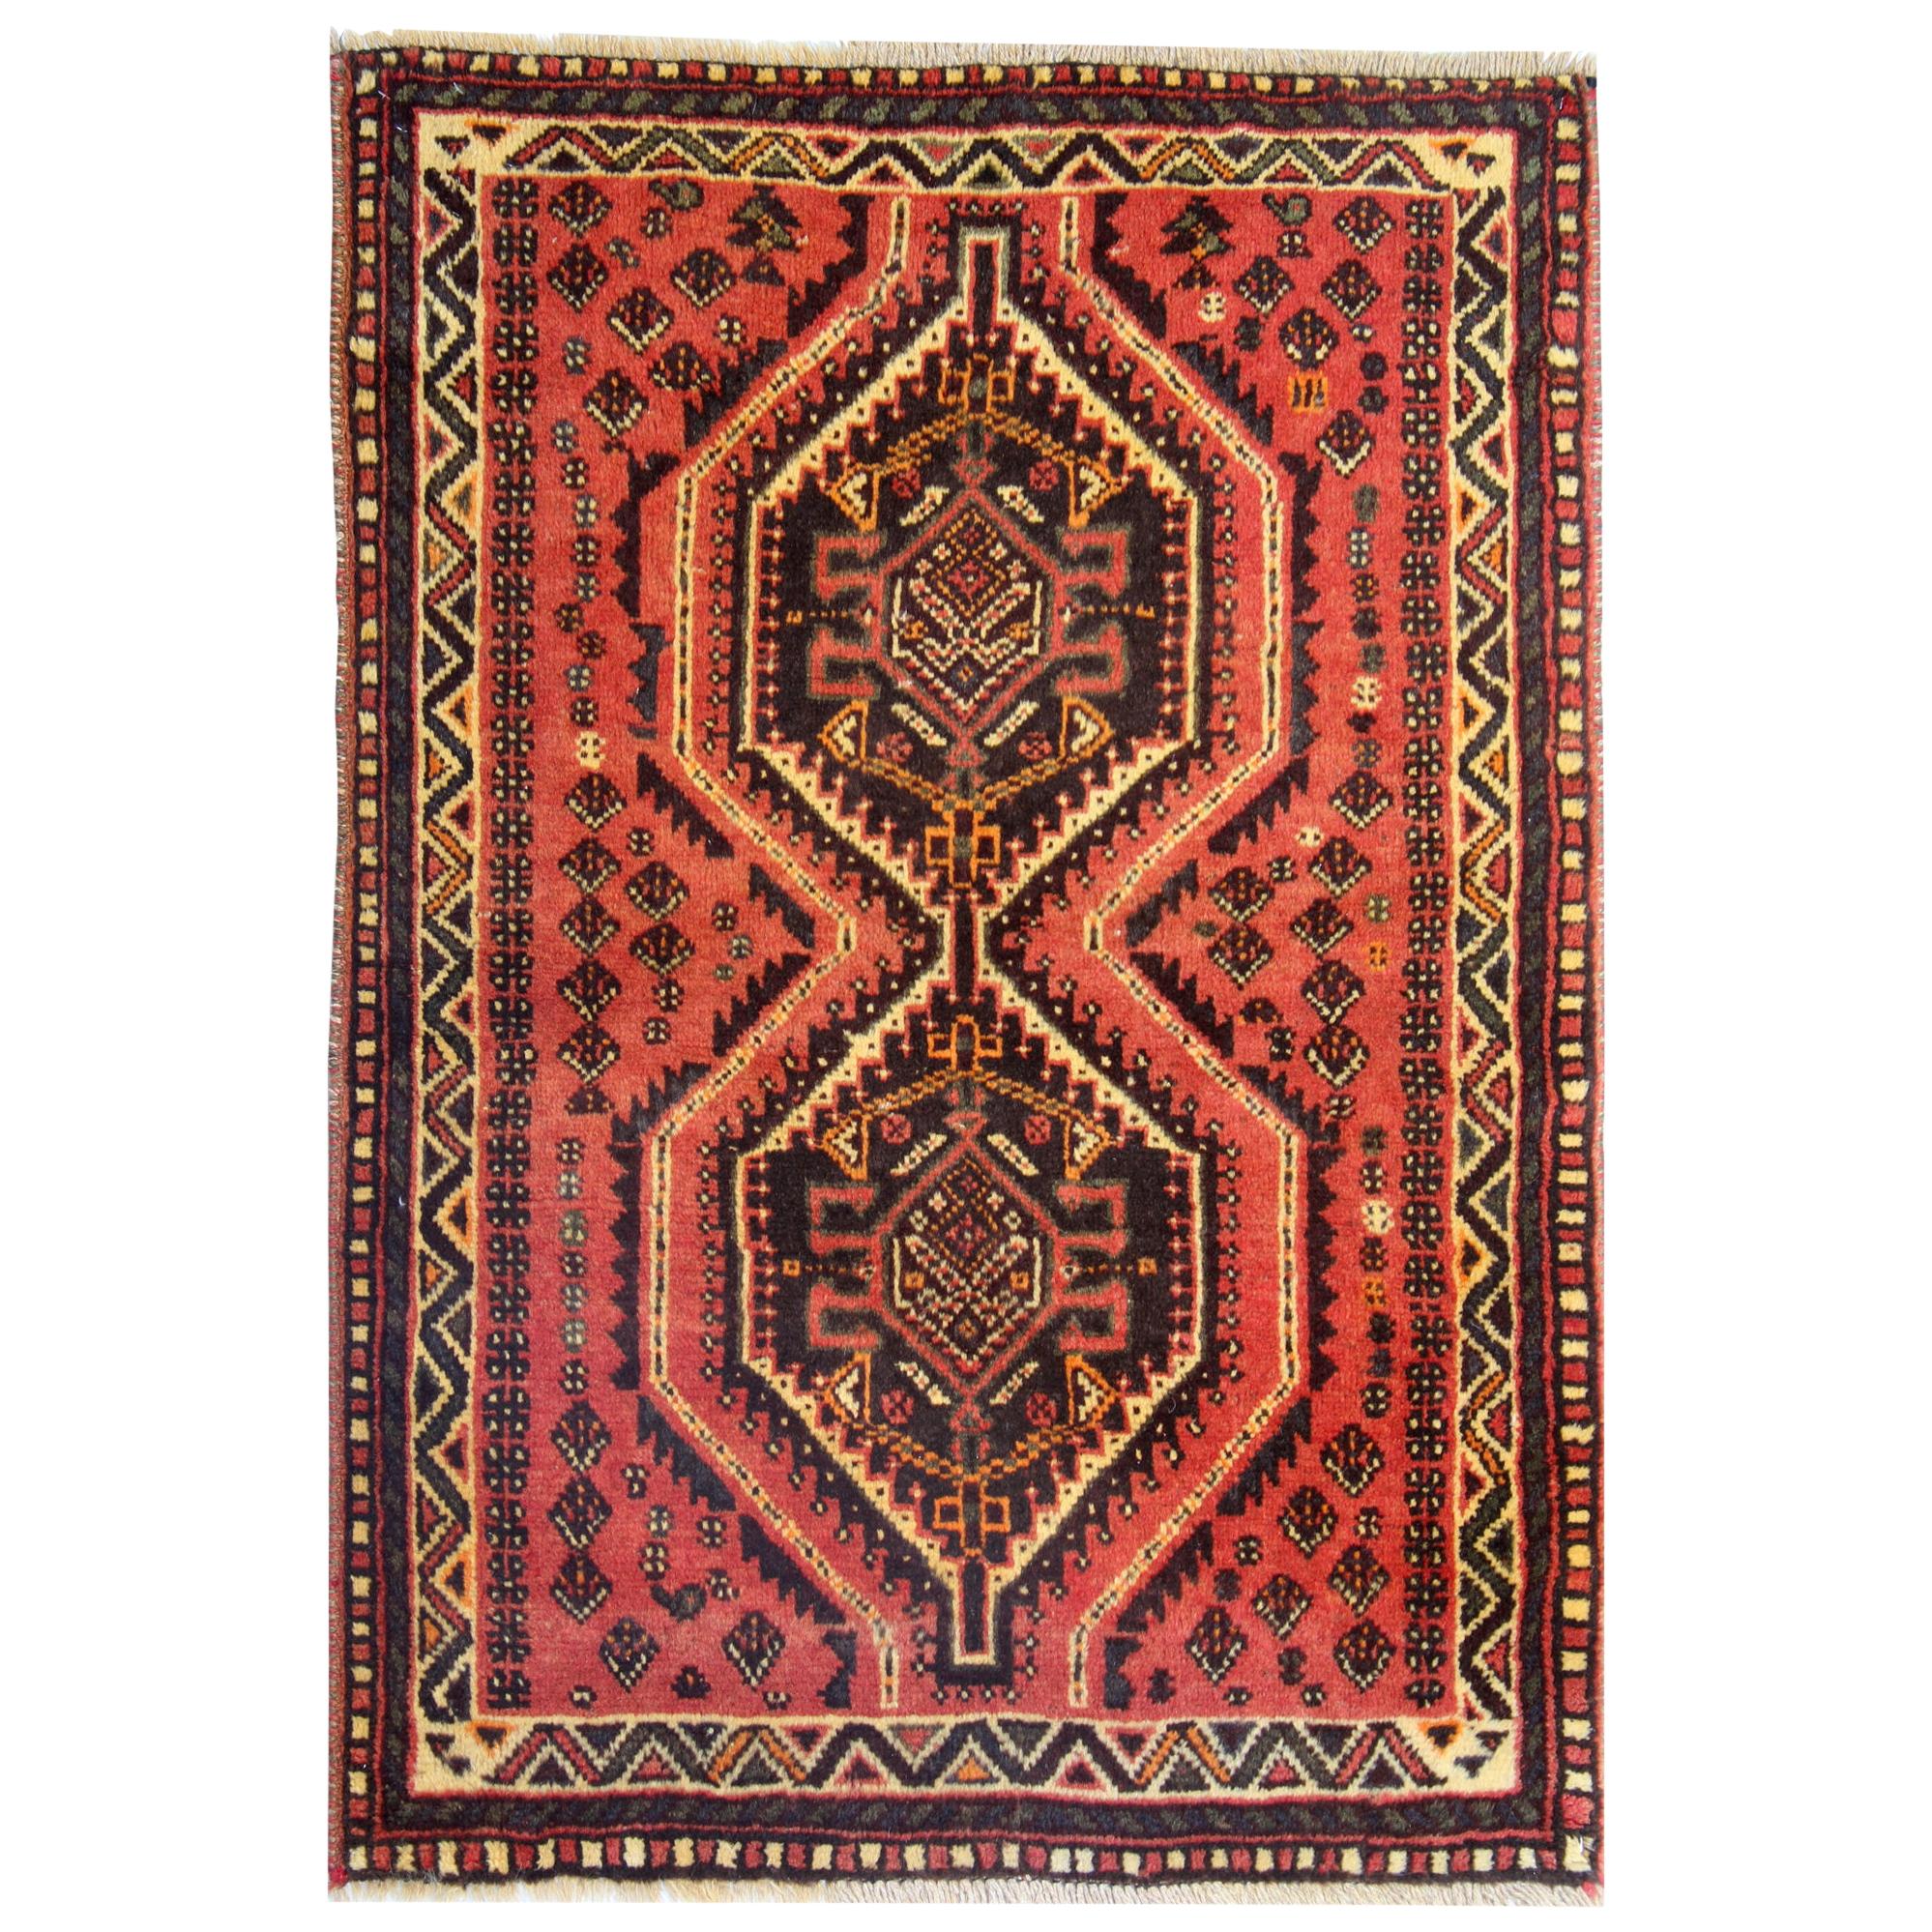 Vintage Oriental Tribal Rug, Geometric Handmade Wool Carpet Area Rug